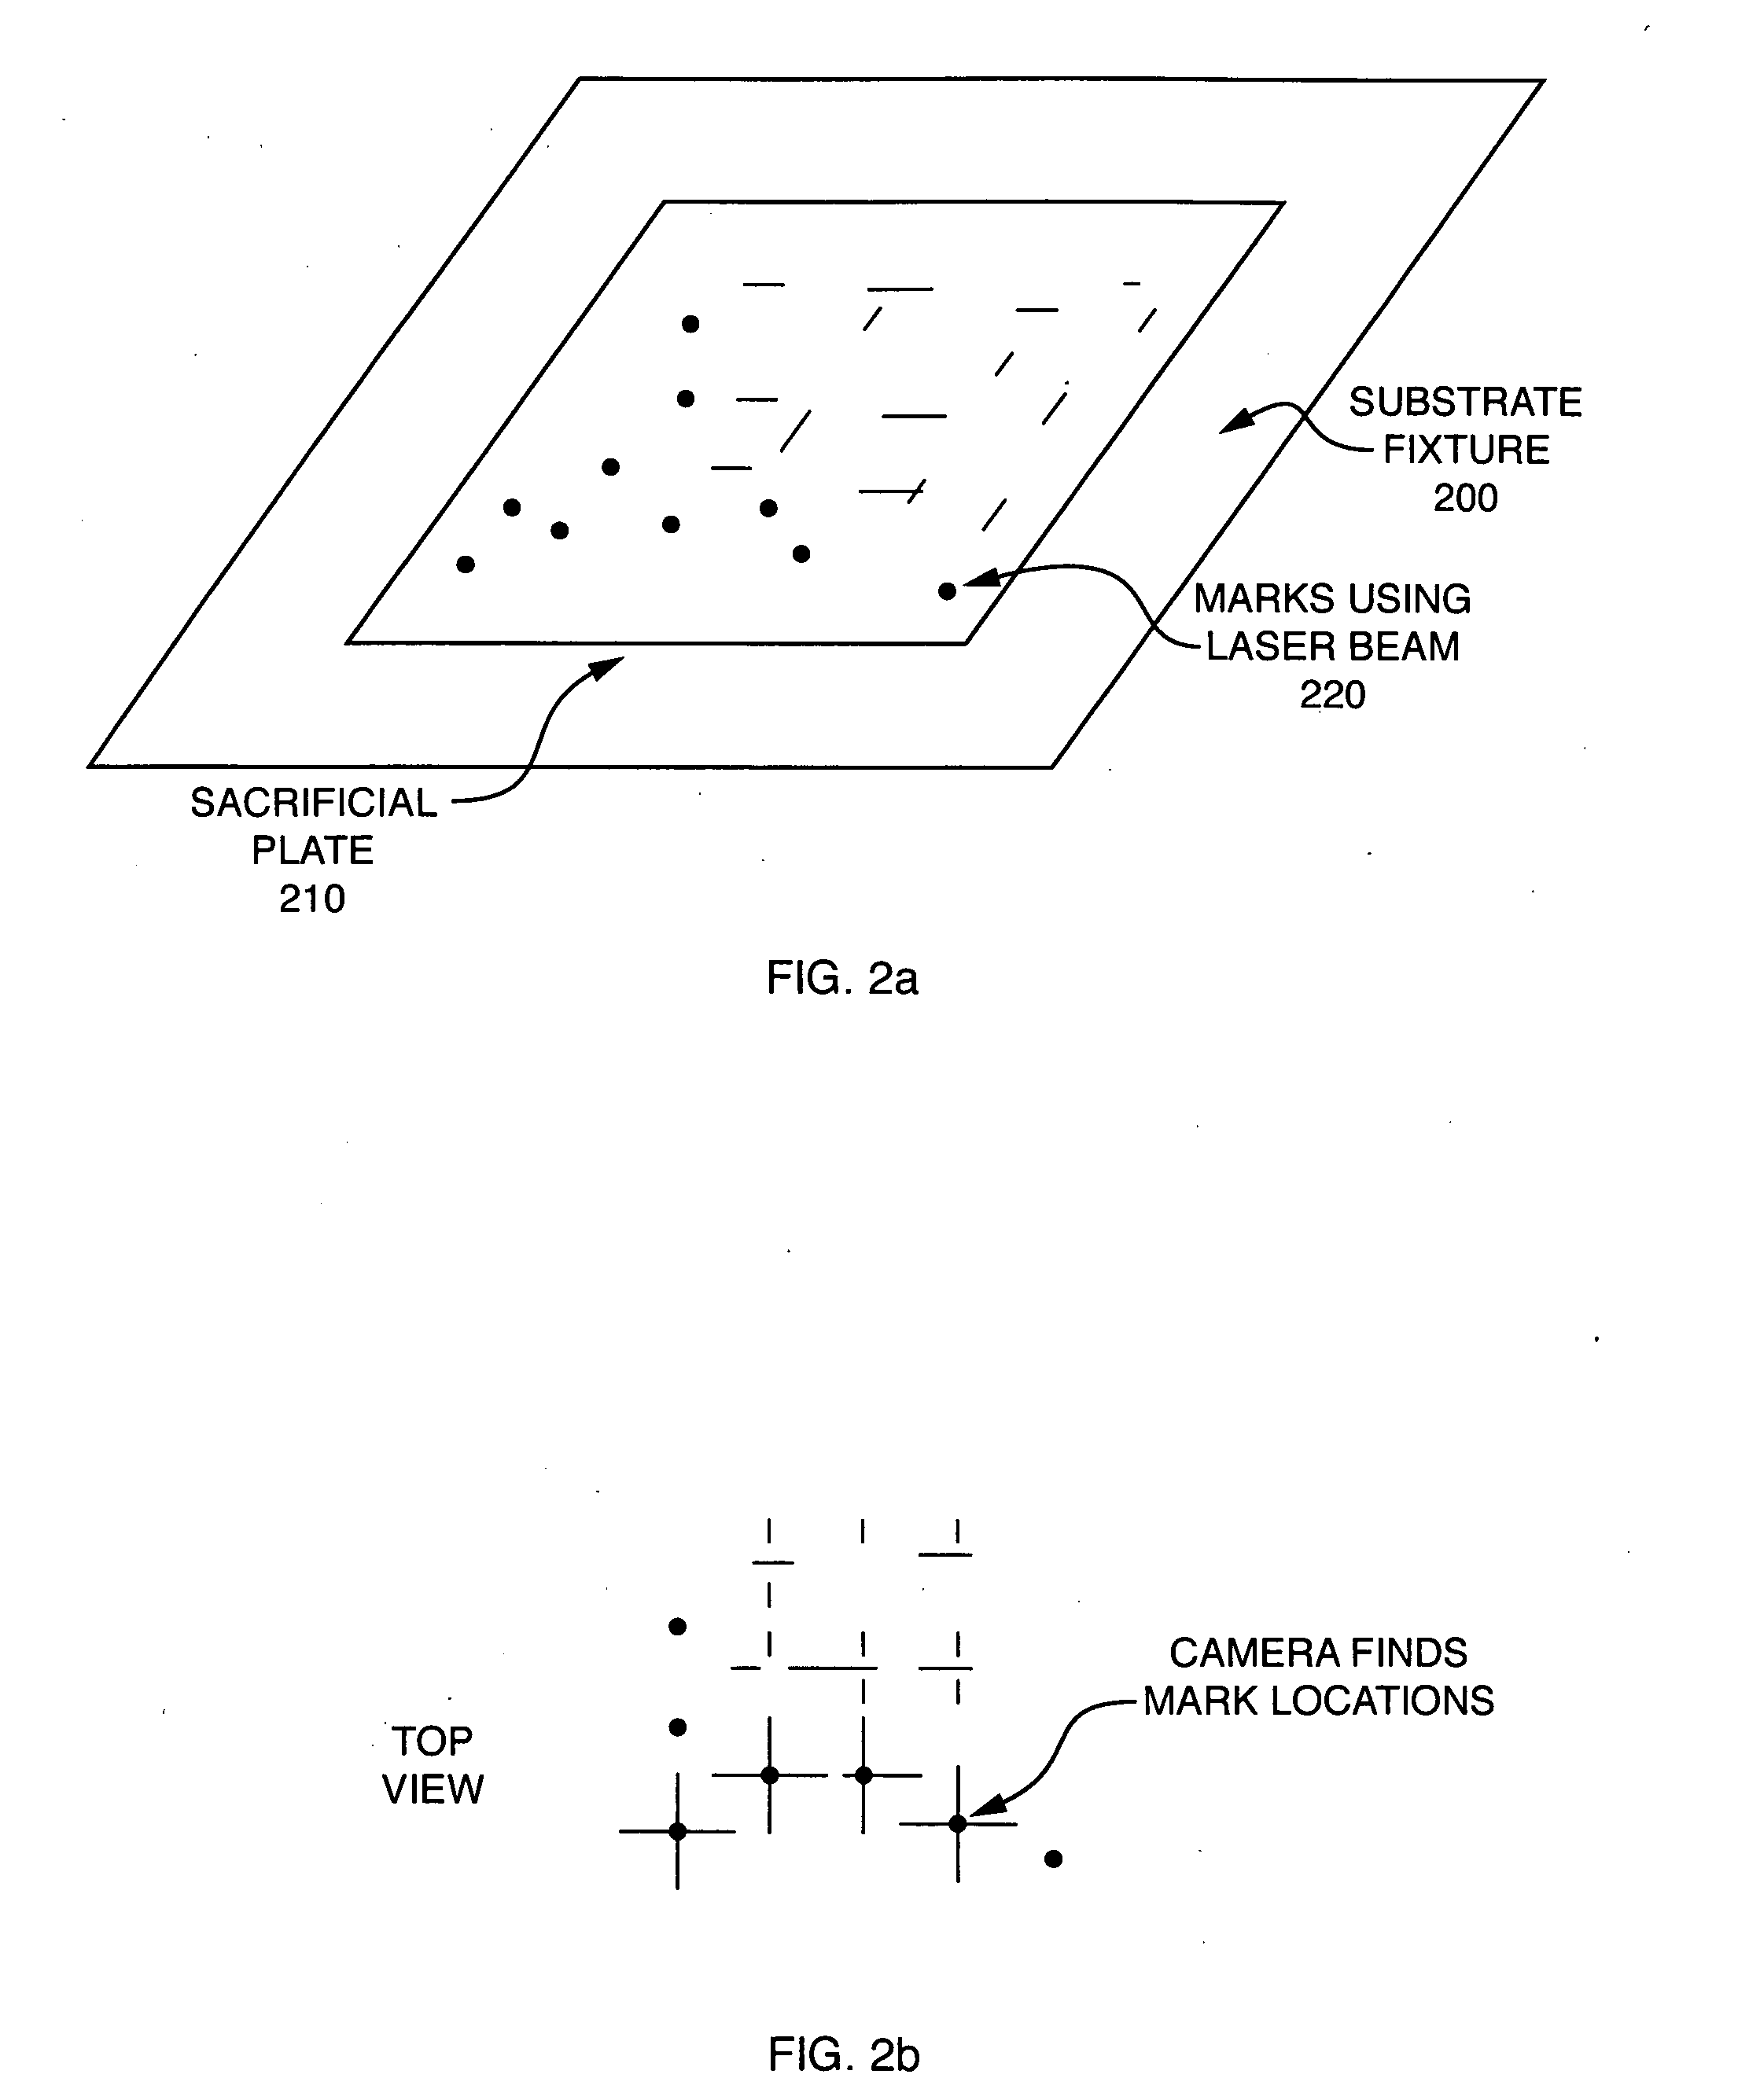 Laser trim motion, calibration, imaging, and fixturing techniques